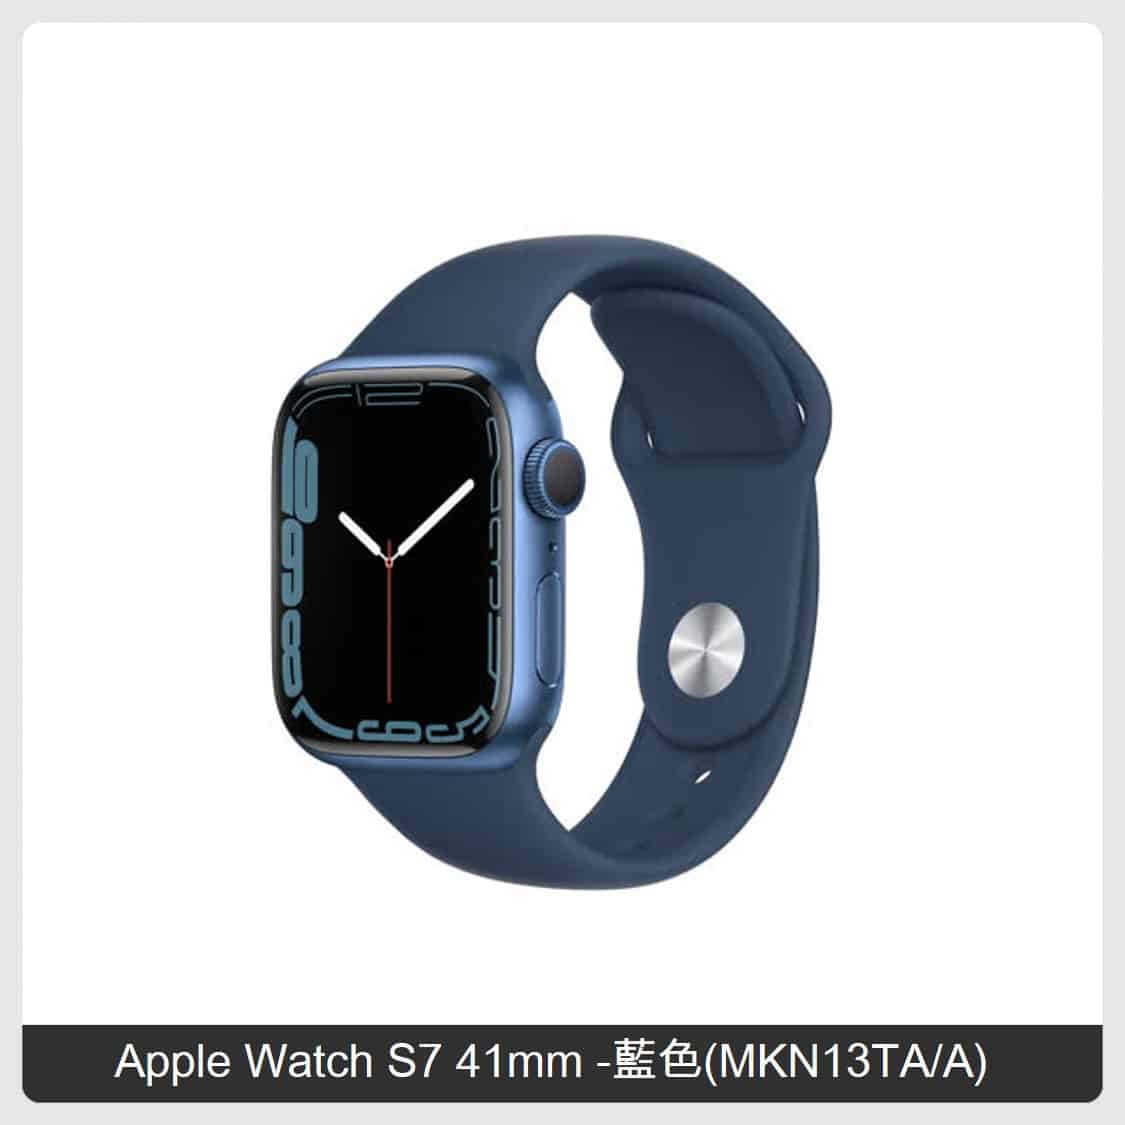 Apple Watch S7 41mm – 藍色(MKN13TA/A) | 法雅客網路商店